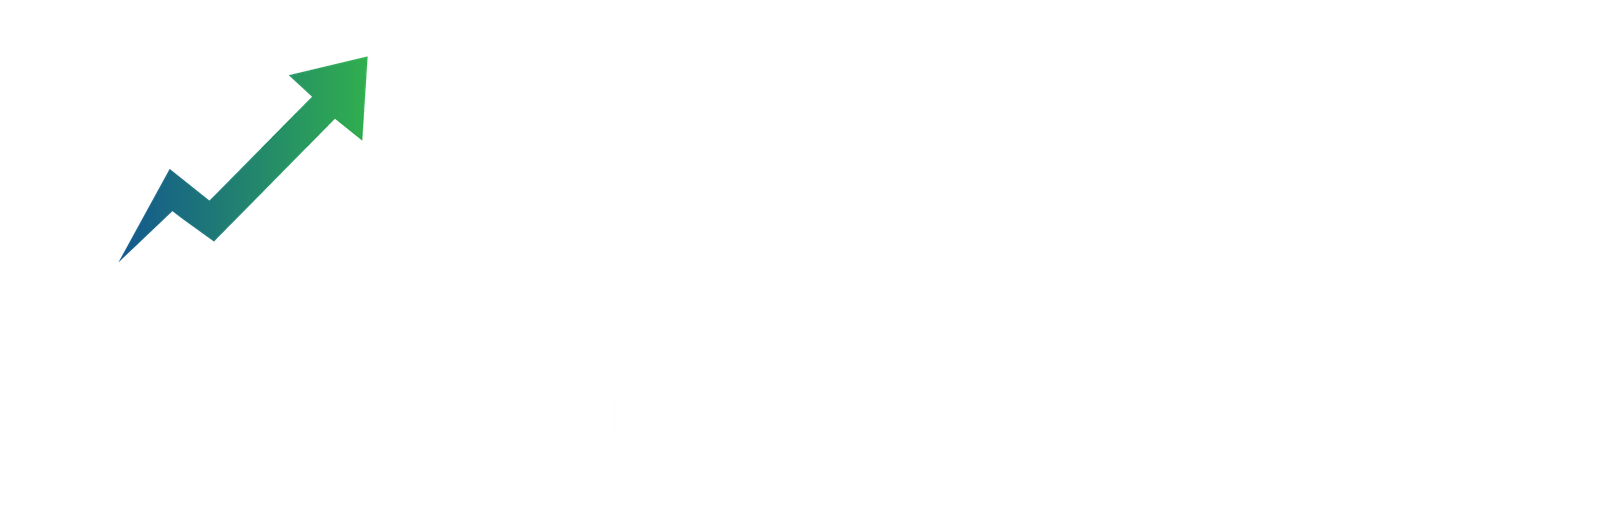 Bouvardia Financial Solutions